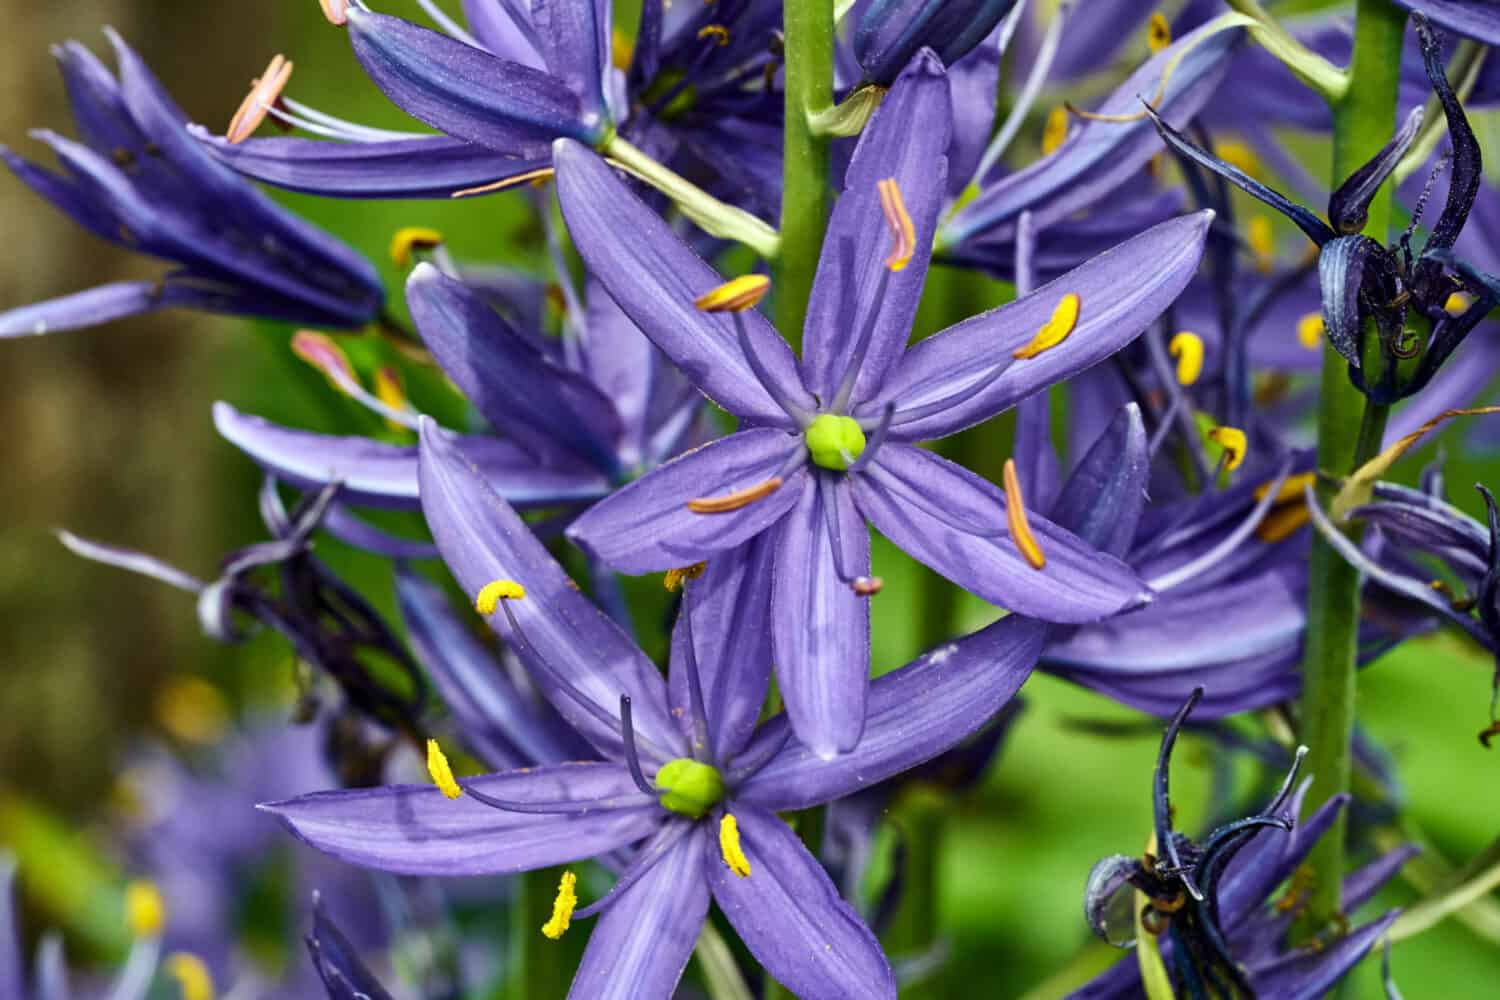 Indian hyacinth (Camassia). Camas, quamash, camash or wild hyacinth flowers, selective focus, close-up. Camassia flowers in bloom.